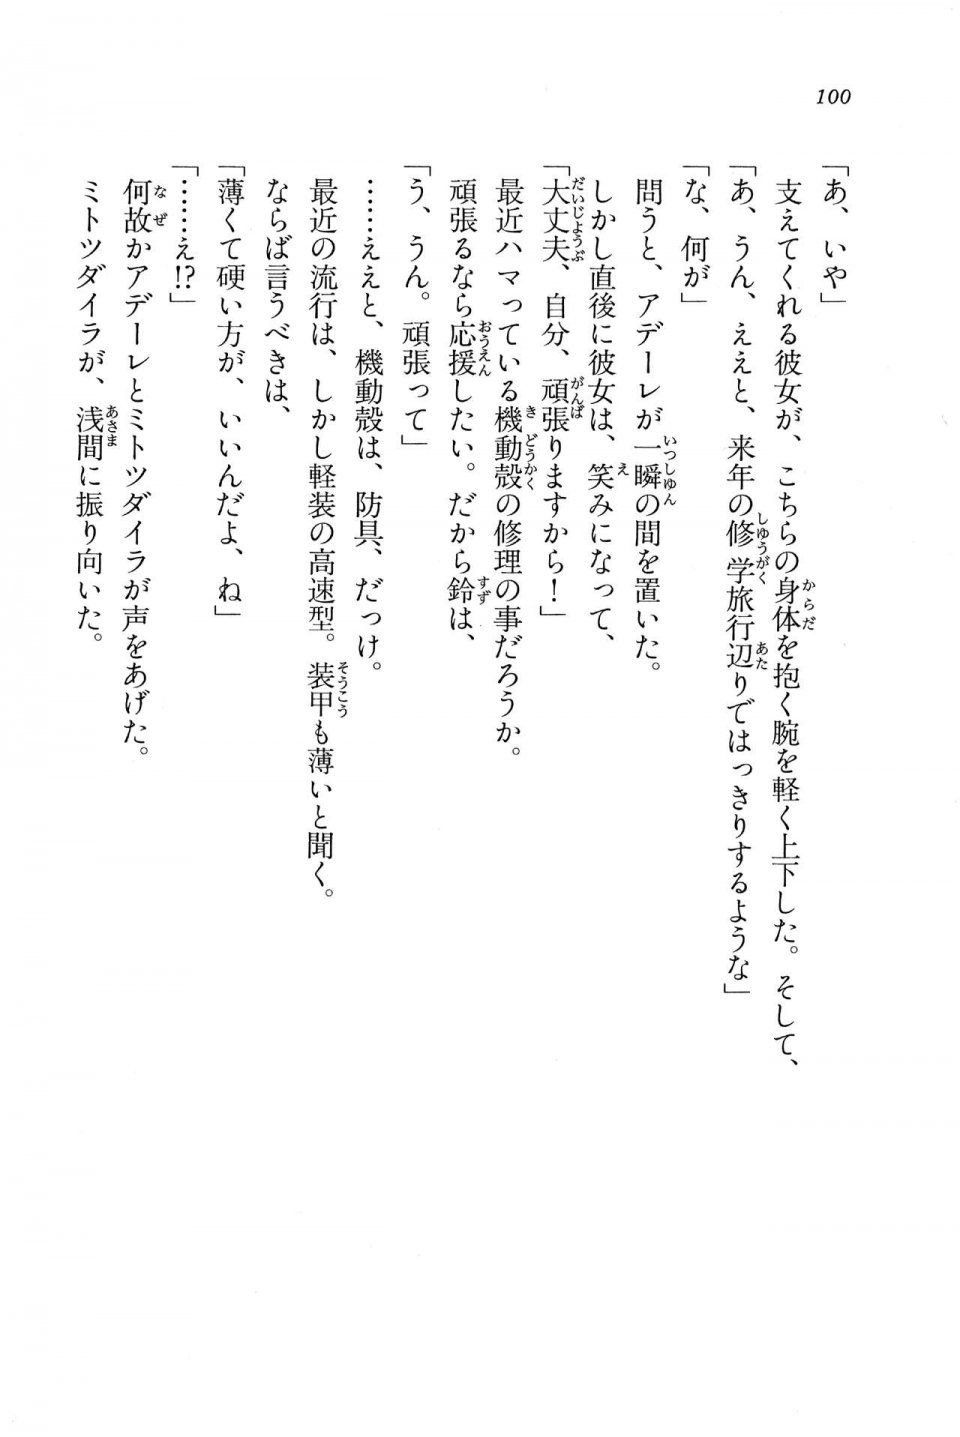 Kyoukai Senjou no Horizon BD Special Mininovel Vol 7(4A) - Photo #104